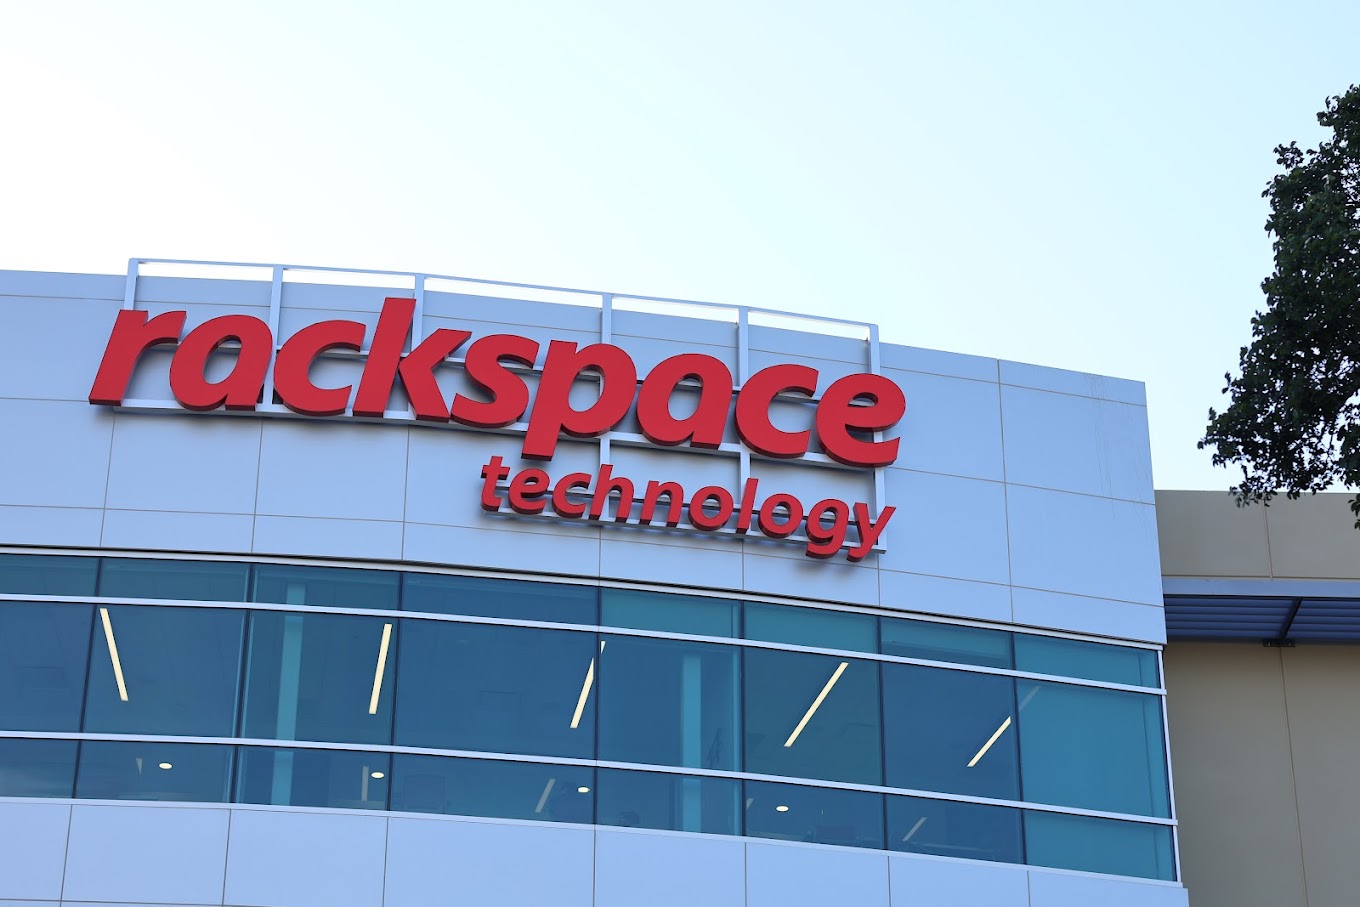 Rackspace Newscaslte new office